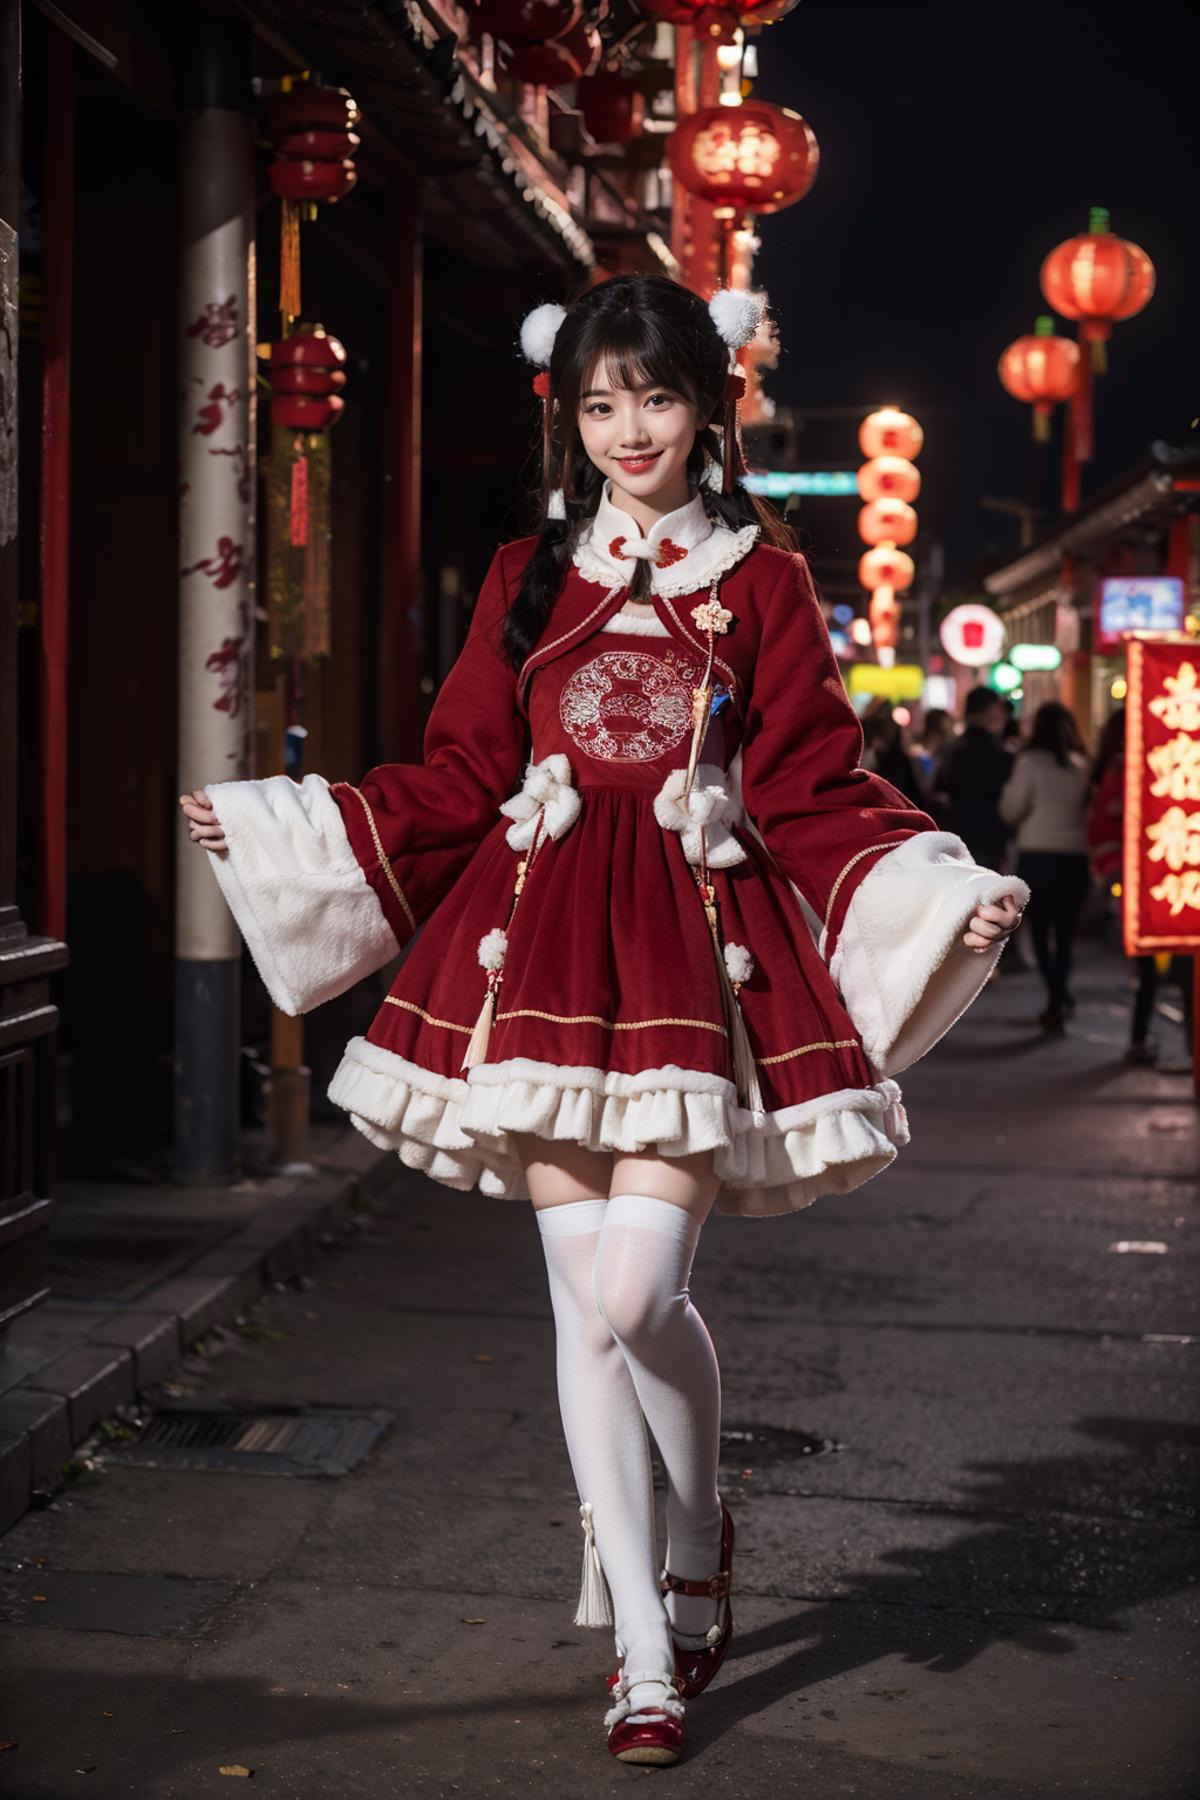 [Realistic] Chinese new year style dress | 农历新年风裙子（新中式/中式Lo裙） image by cyberAngel_